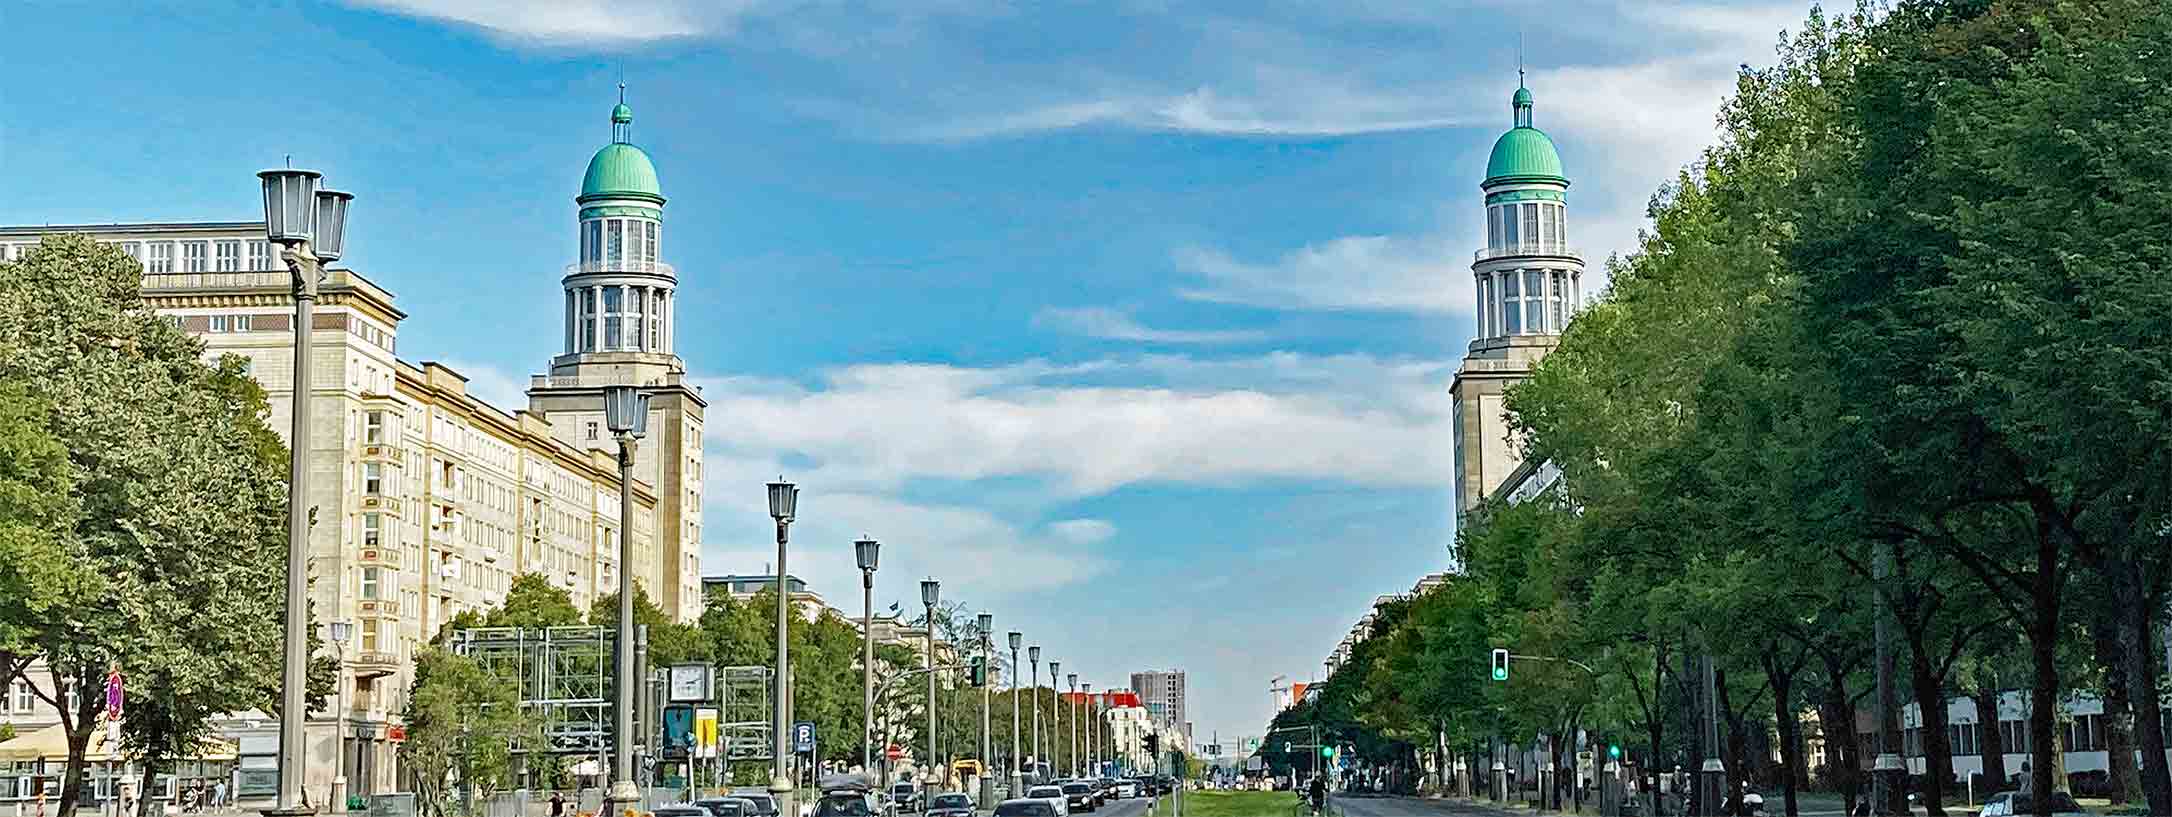 Panoramabild von Berlin Friedrichshain Kreuzberg.